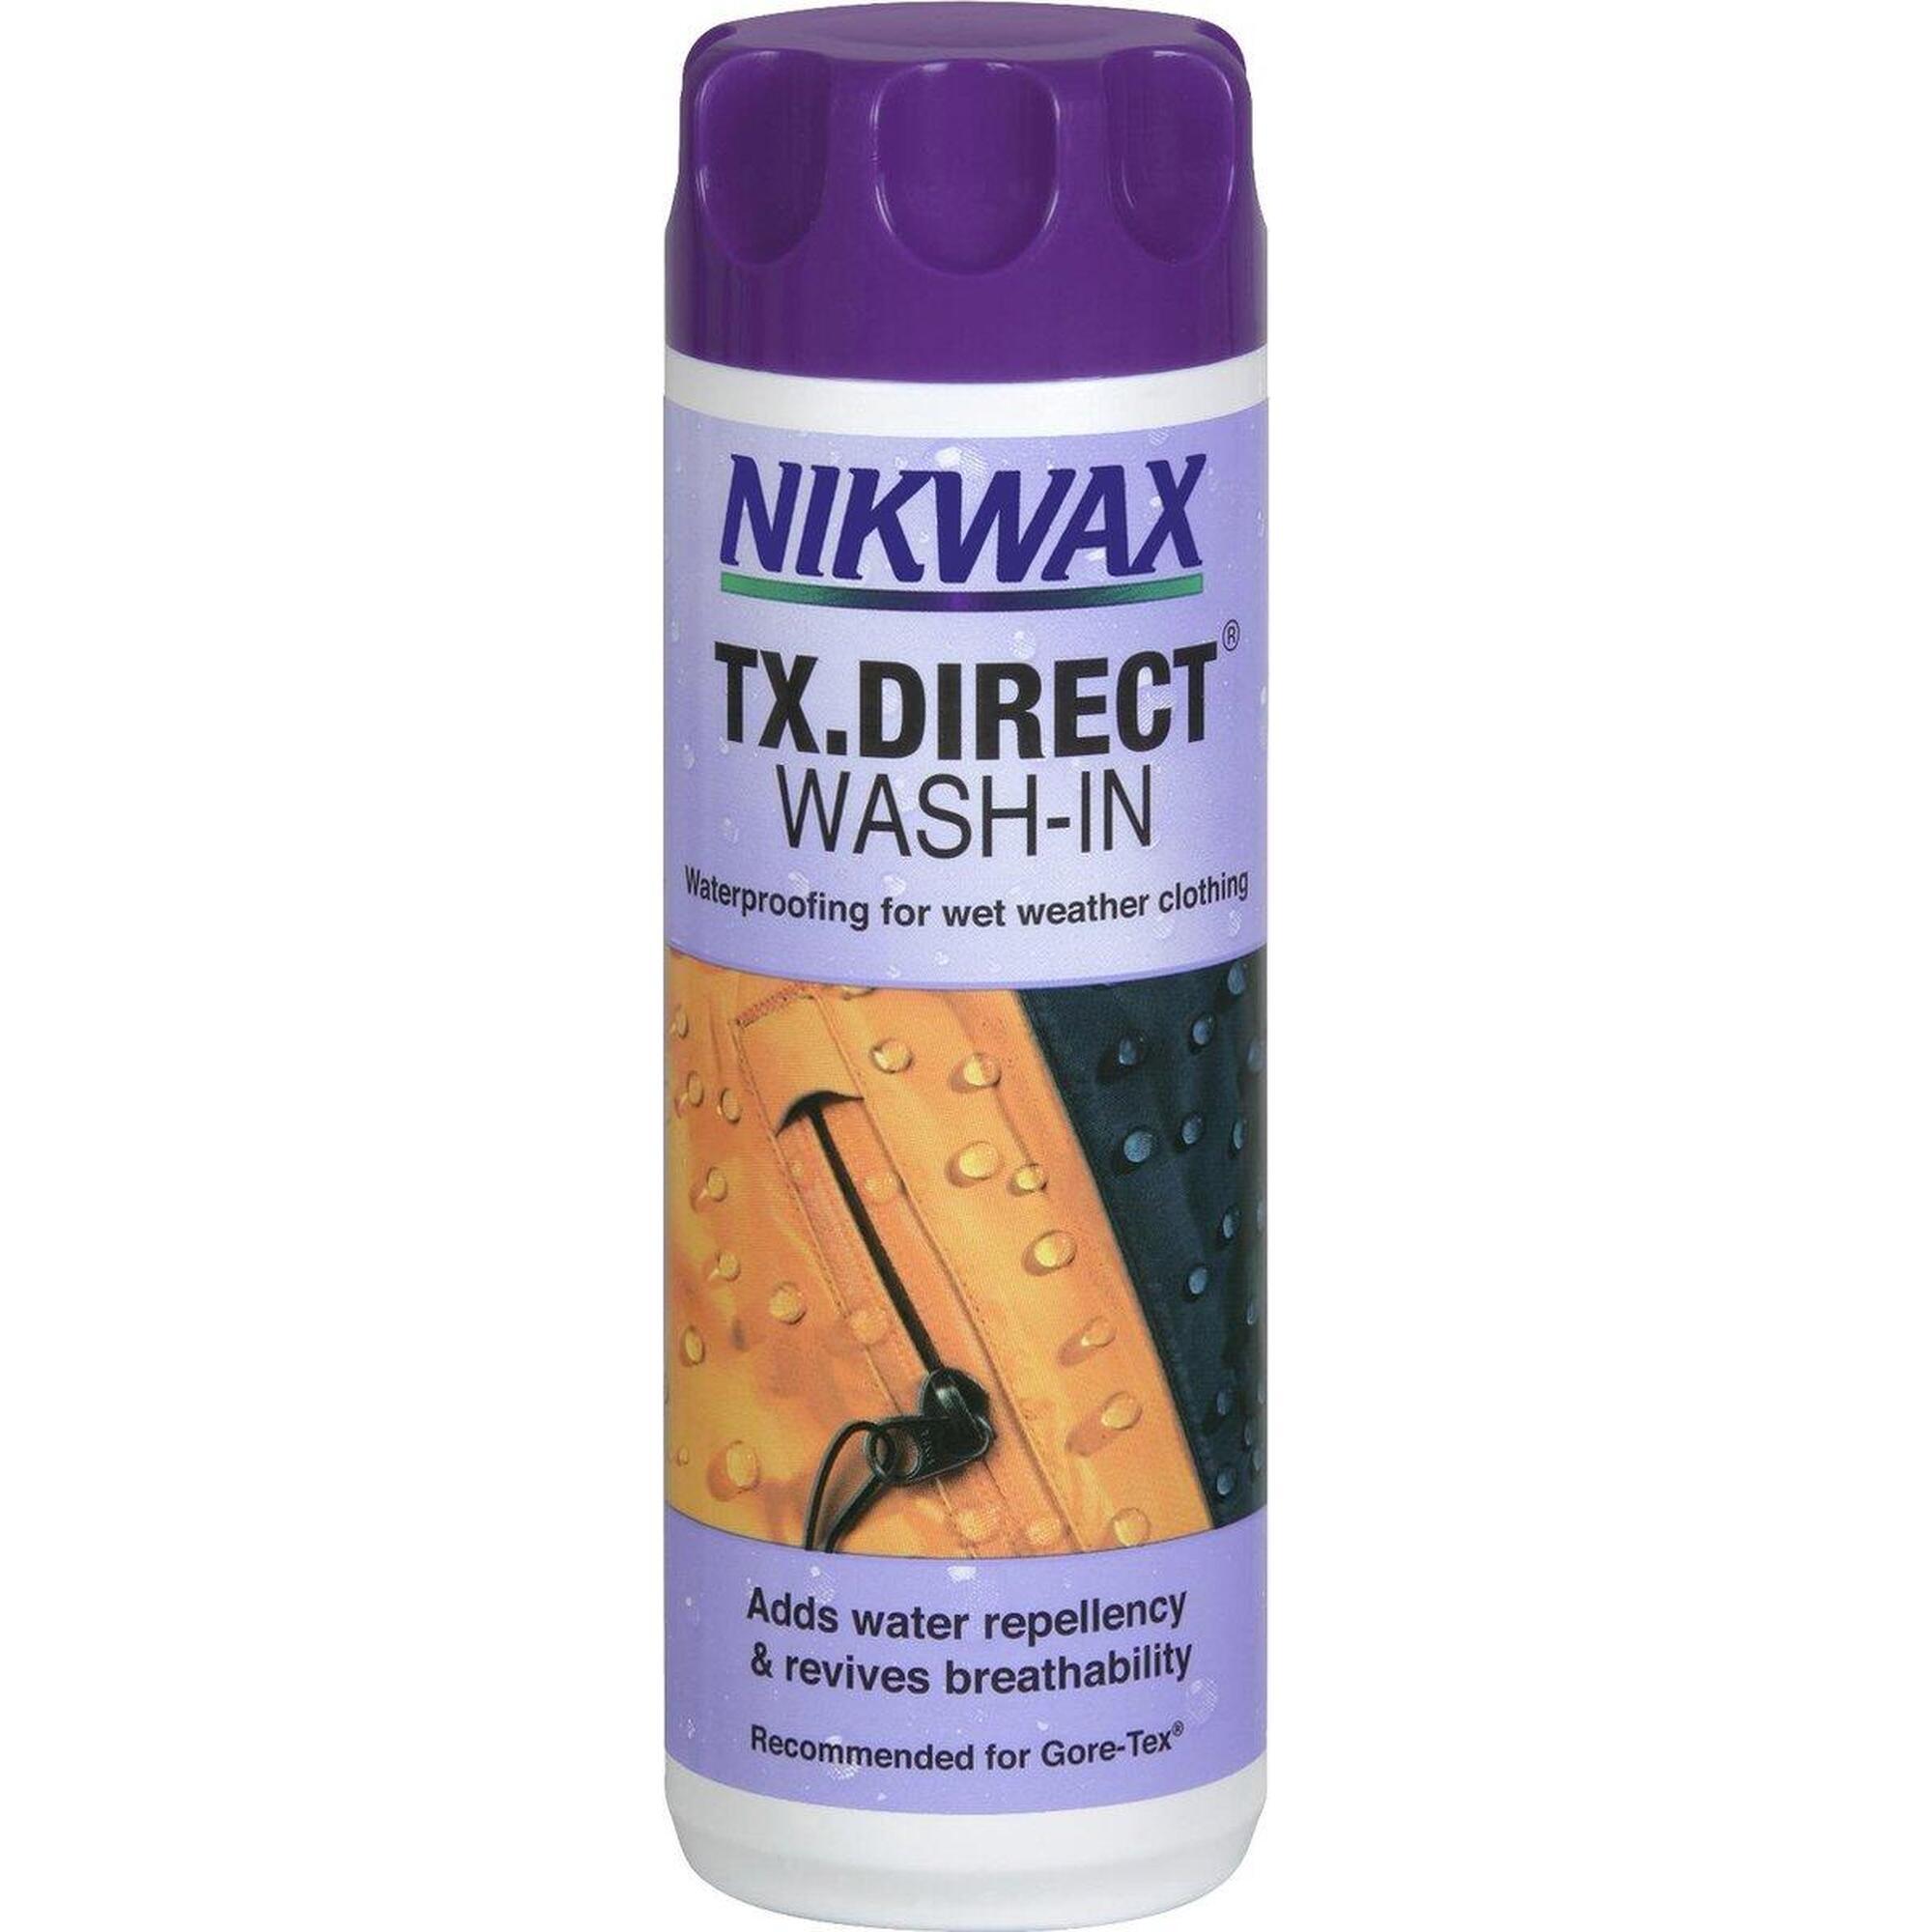 Traitement imperméabilisant 300ML - Nikwax TX Direct Wash-In